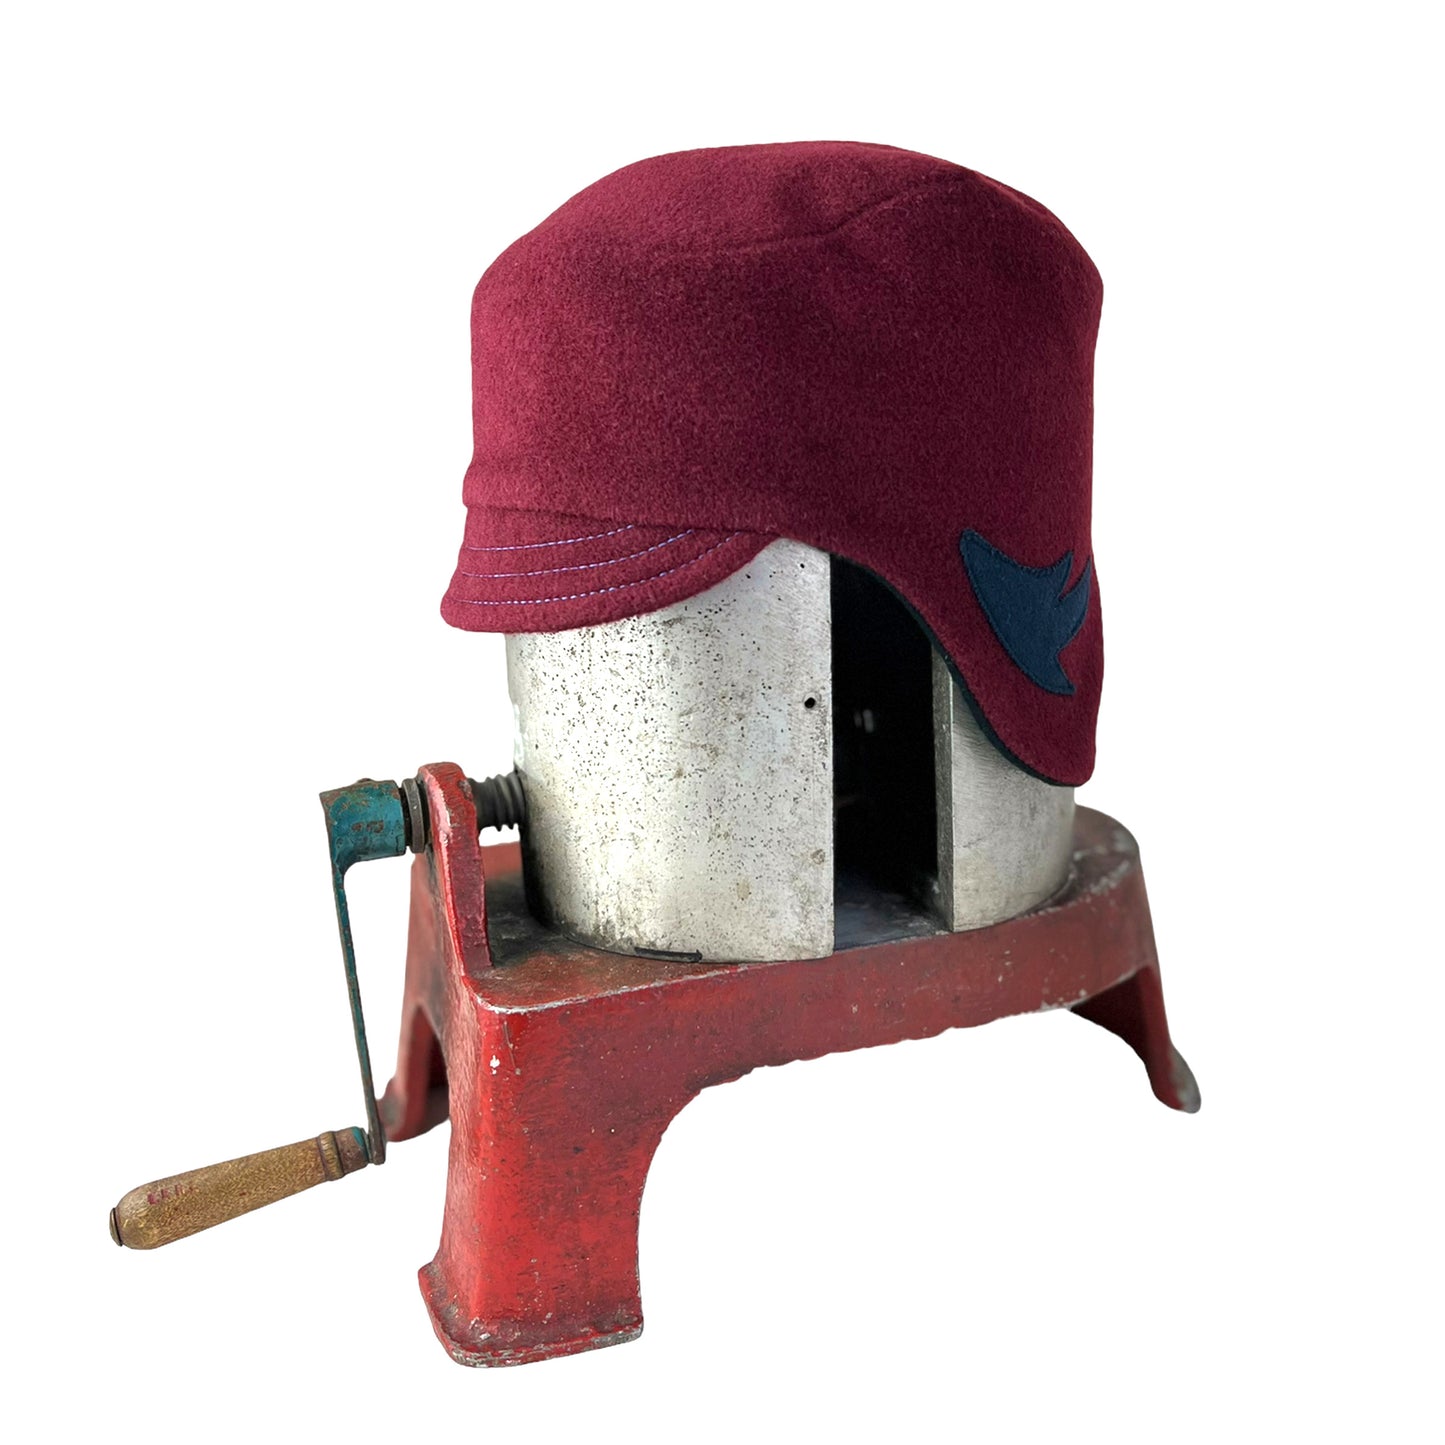 Amelia Wool Ear Flap Womens Helmet Hat Large Red Wine